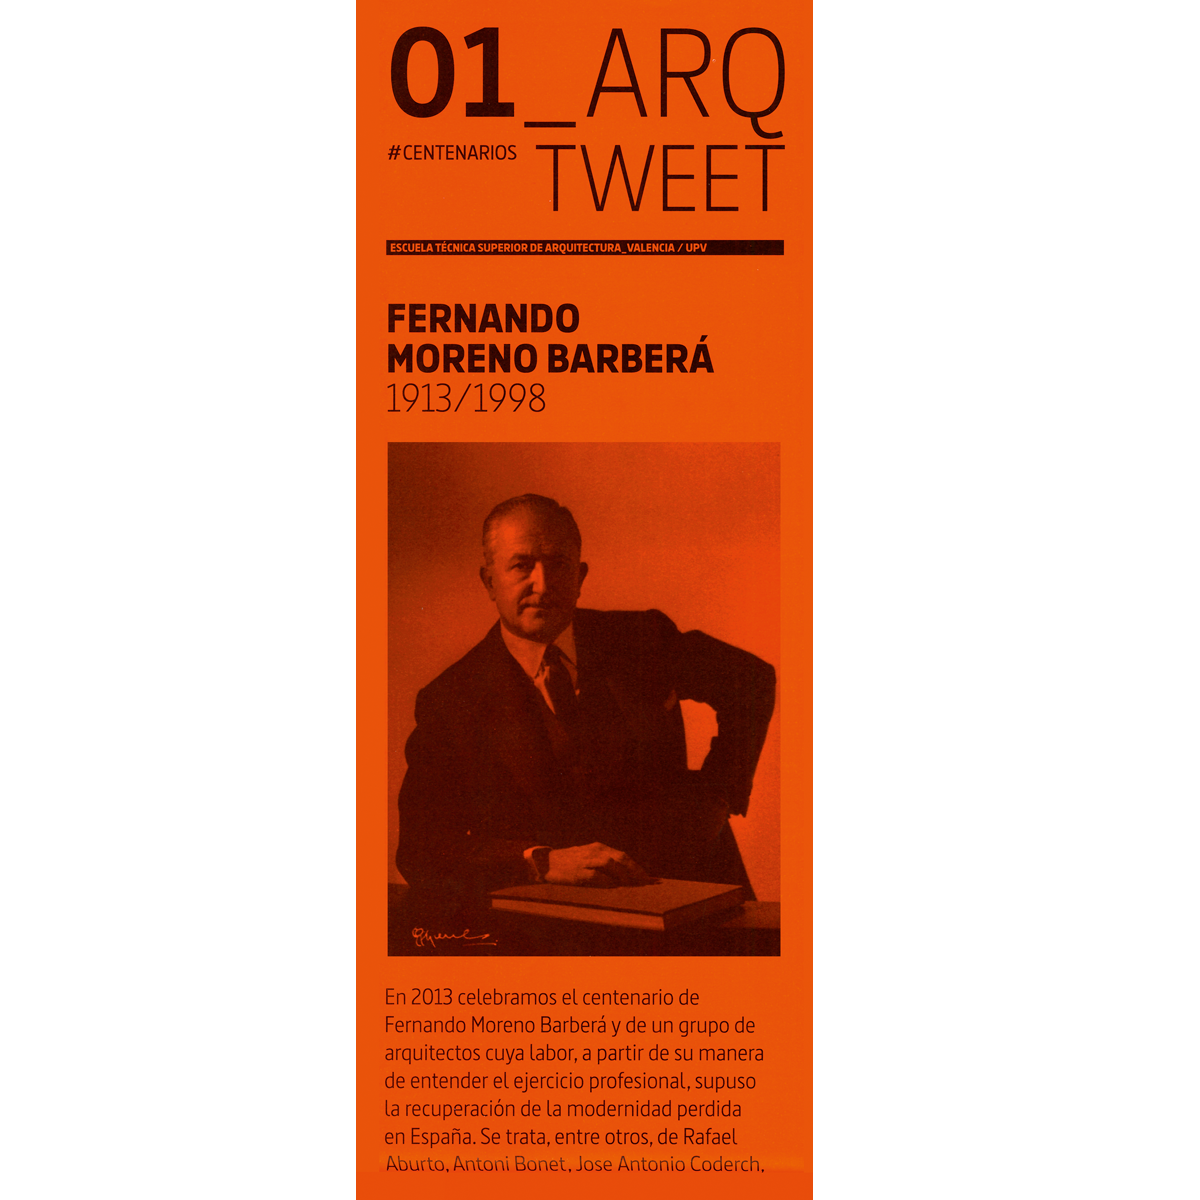 Arq Tweet: Fernando Moreno Barberá